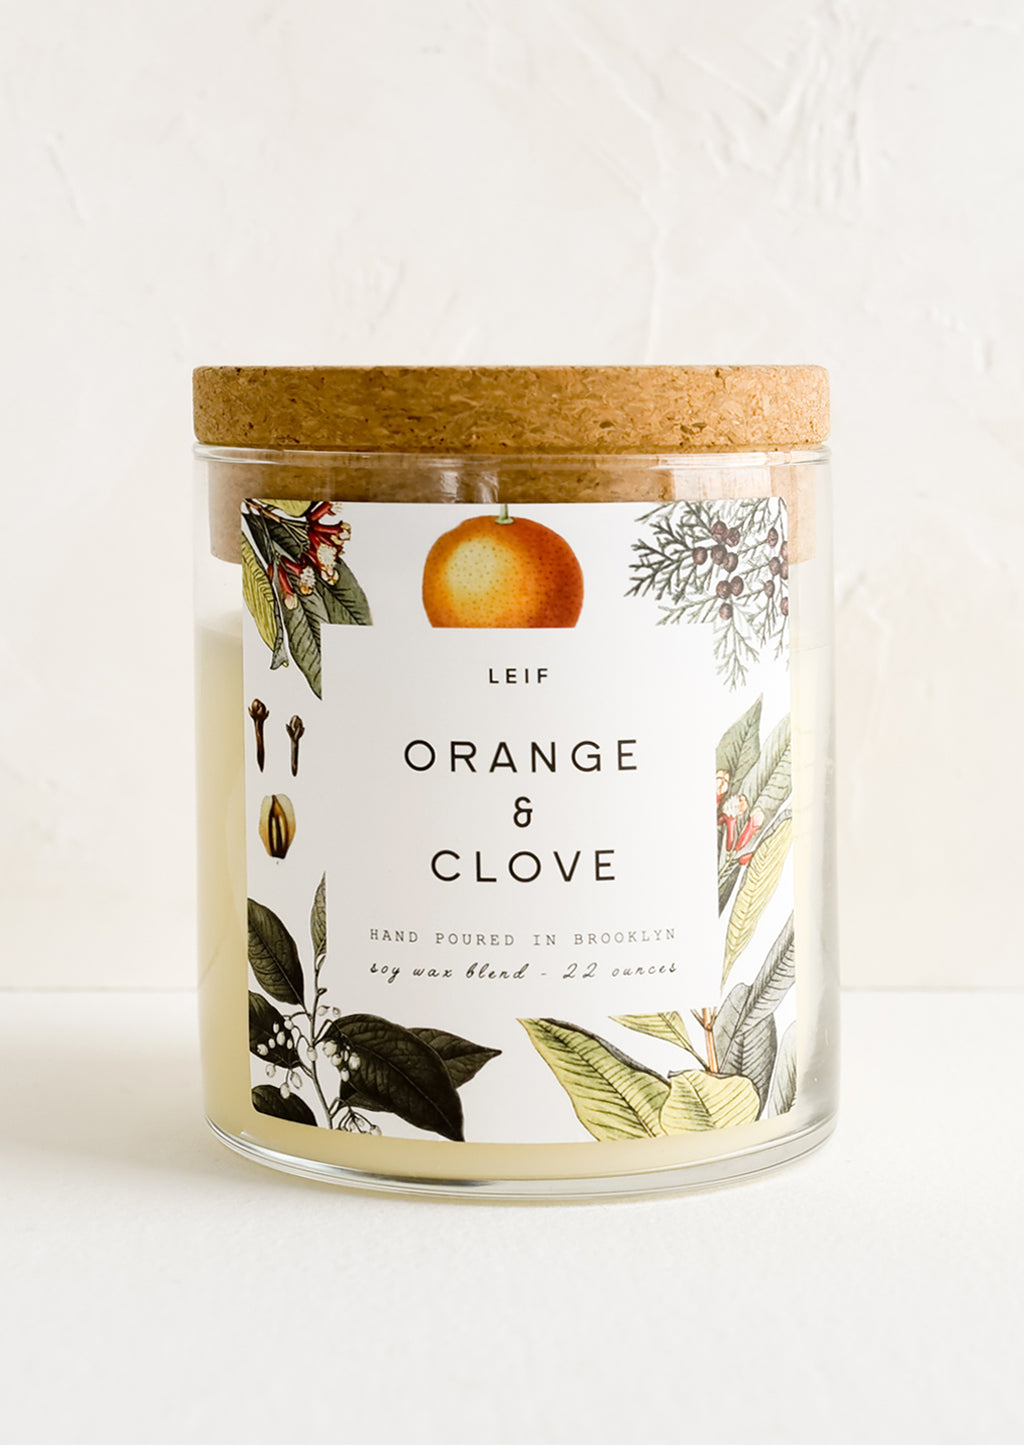 Orange & Clove: A glass jar candle in Orange & Clove scent with botanical print label.